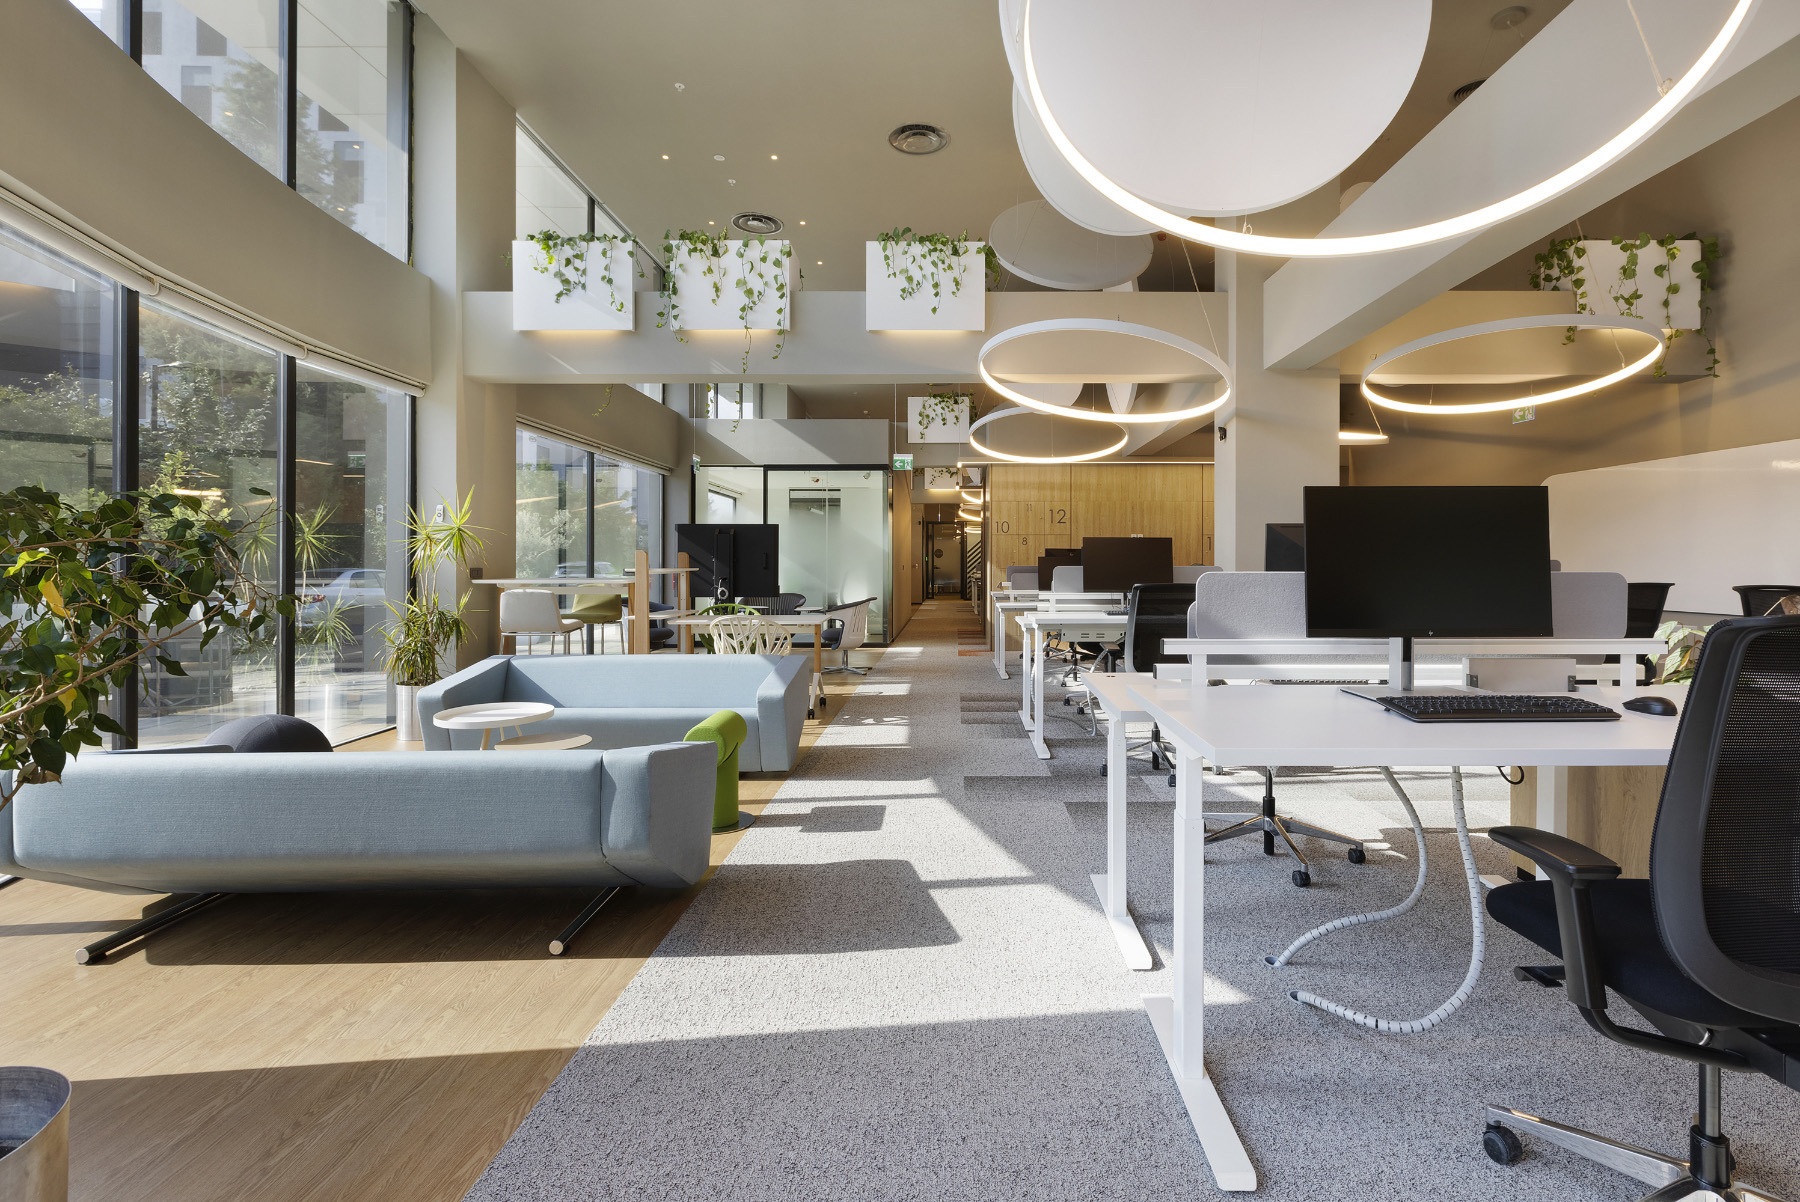 A Look Inside BASF’s New Izmir Office